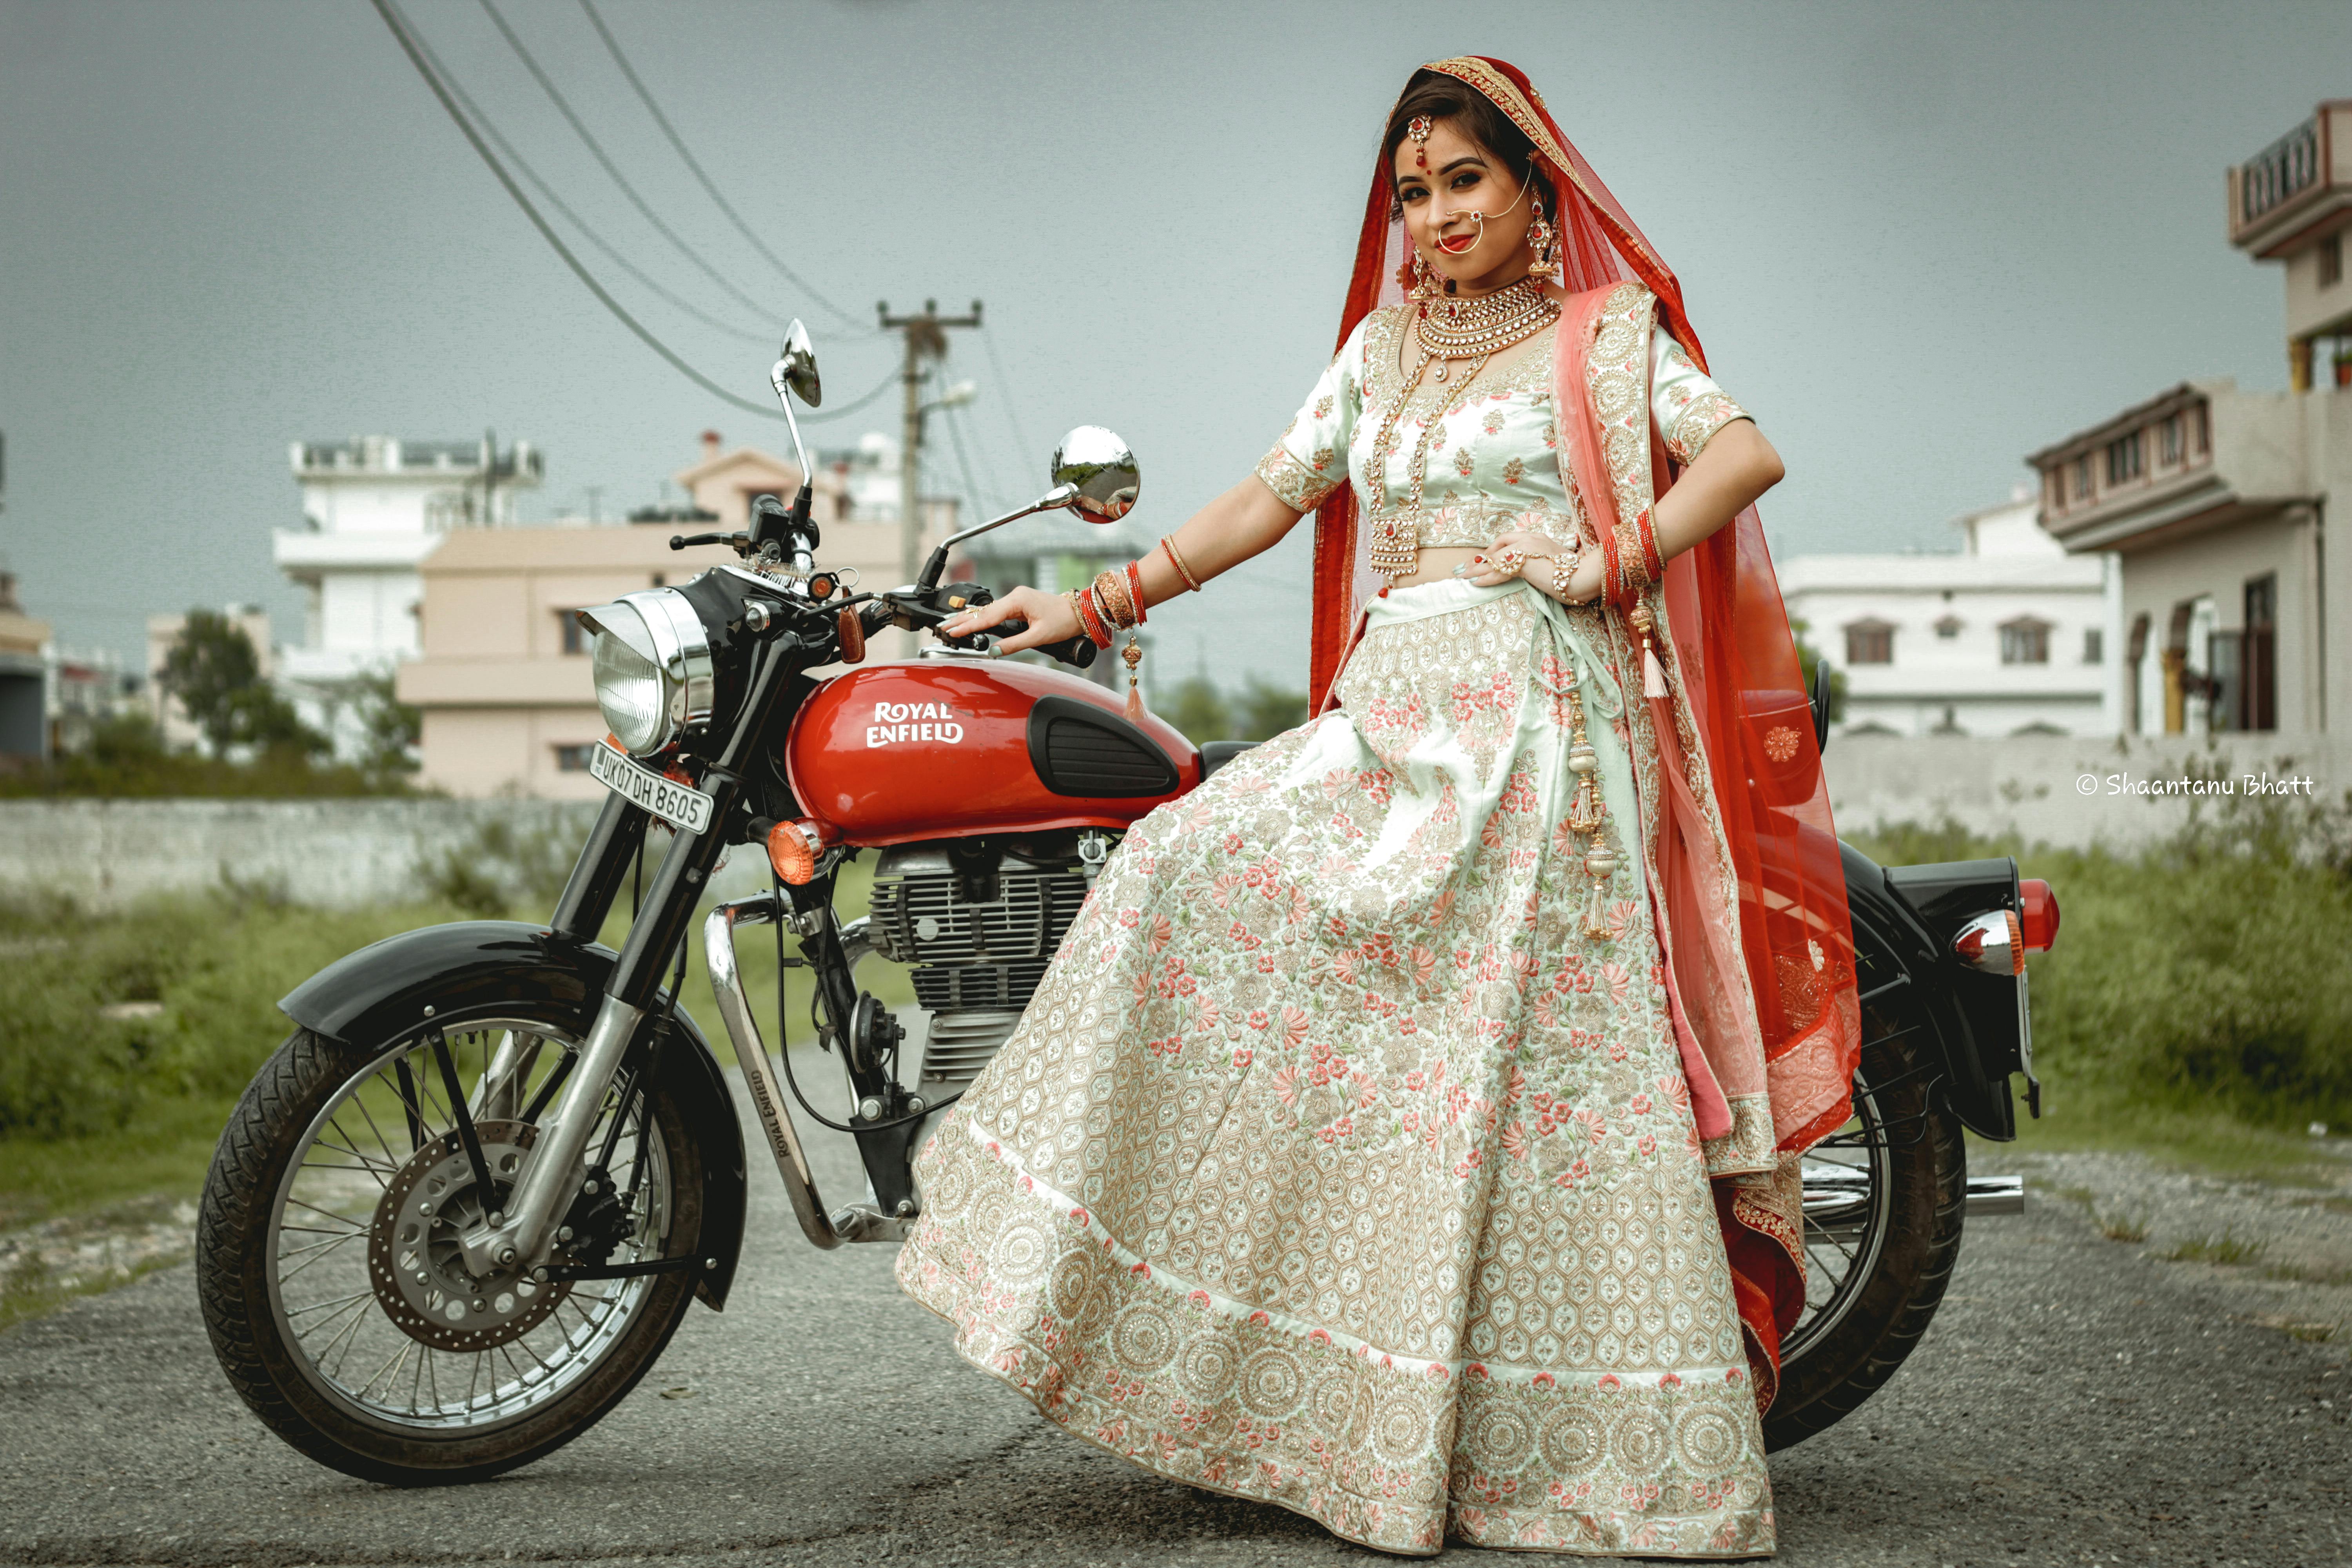 Photoshoot idea, pose with bike, pose with splendor bike, photoshoot pose  for boys|| Ratan gadhwal